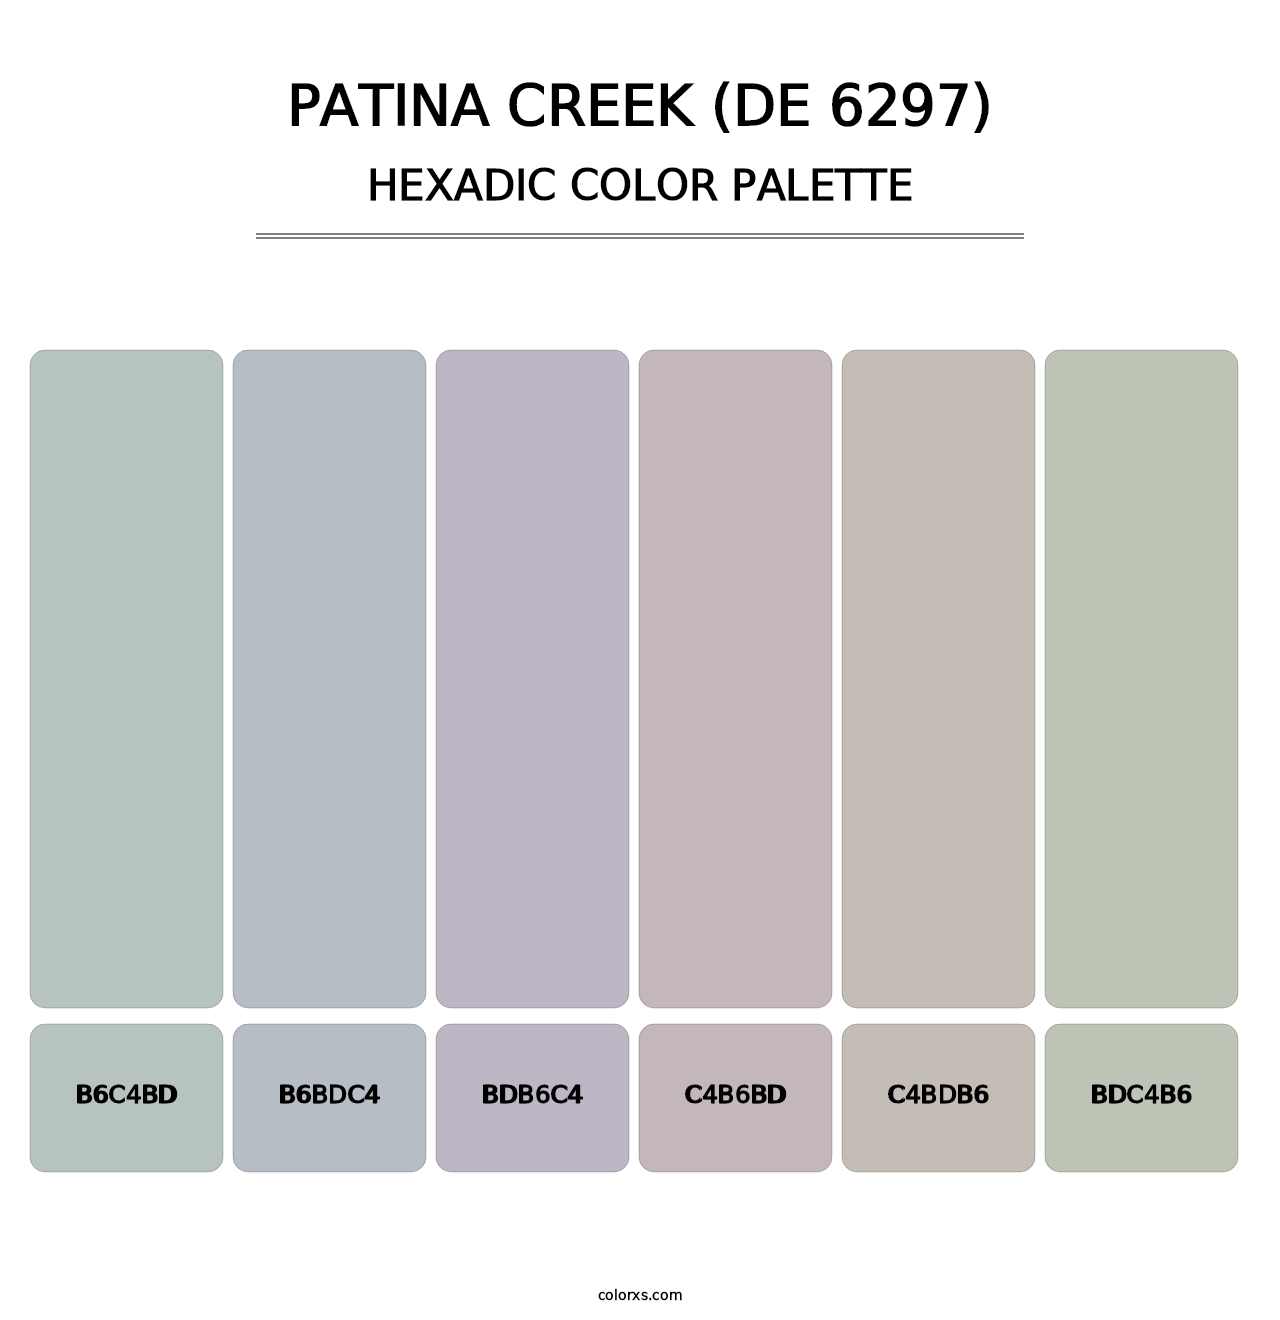 Patina Creek (DE 6297) - Hexadic Color Palette